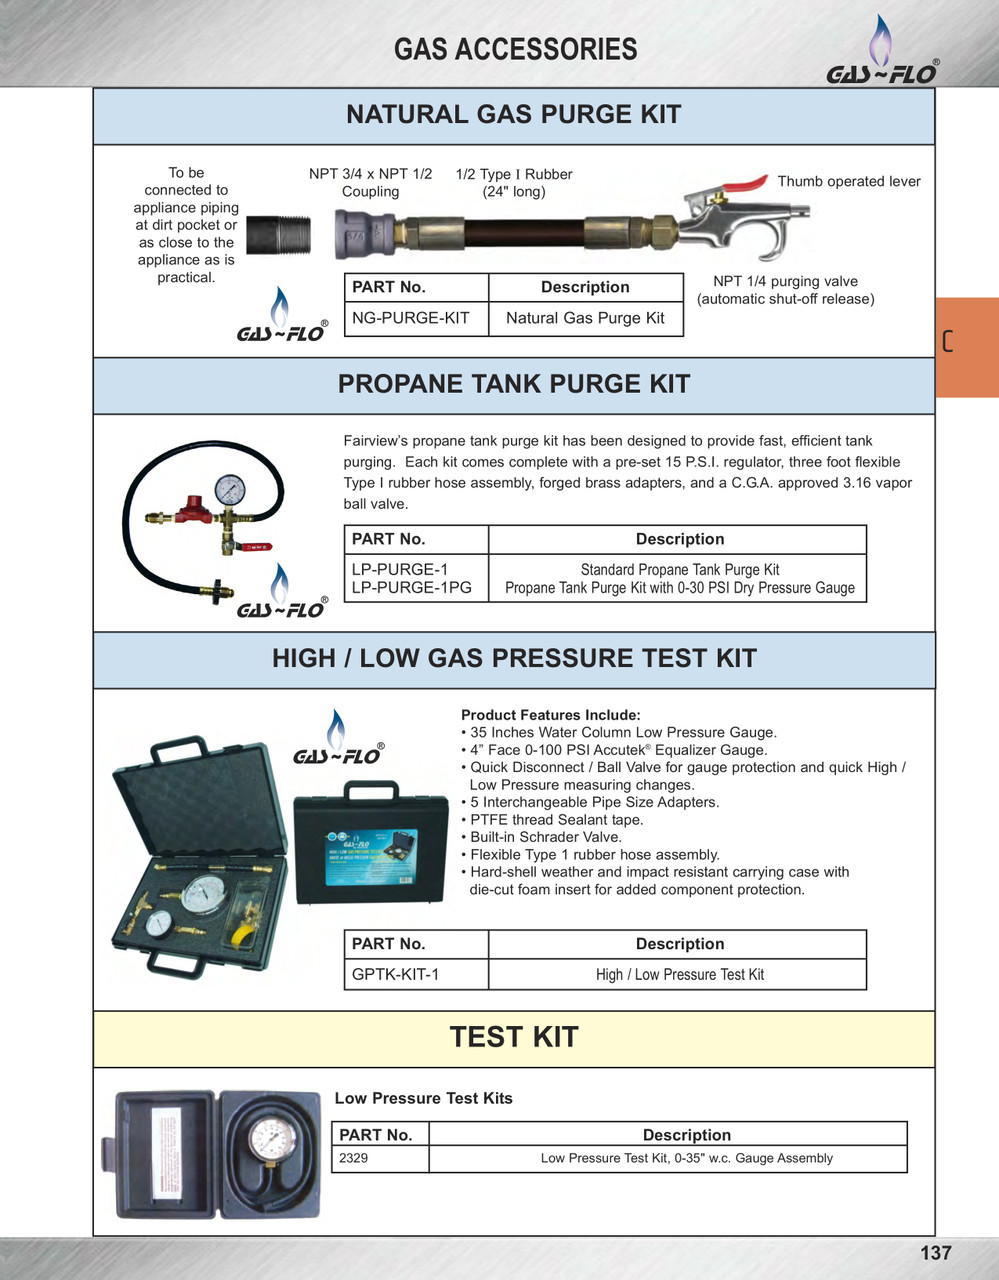 High~Low Gas Pressure Test Kit  GPTK-KIT-1